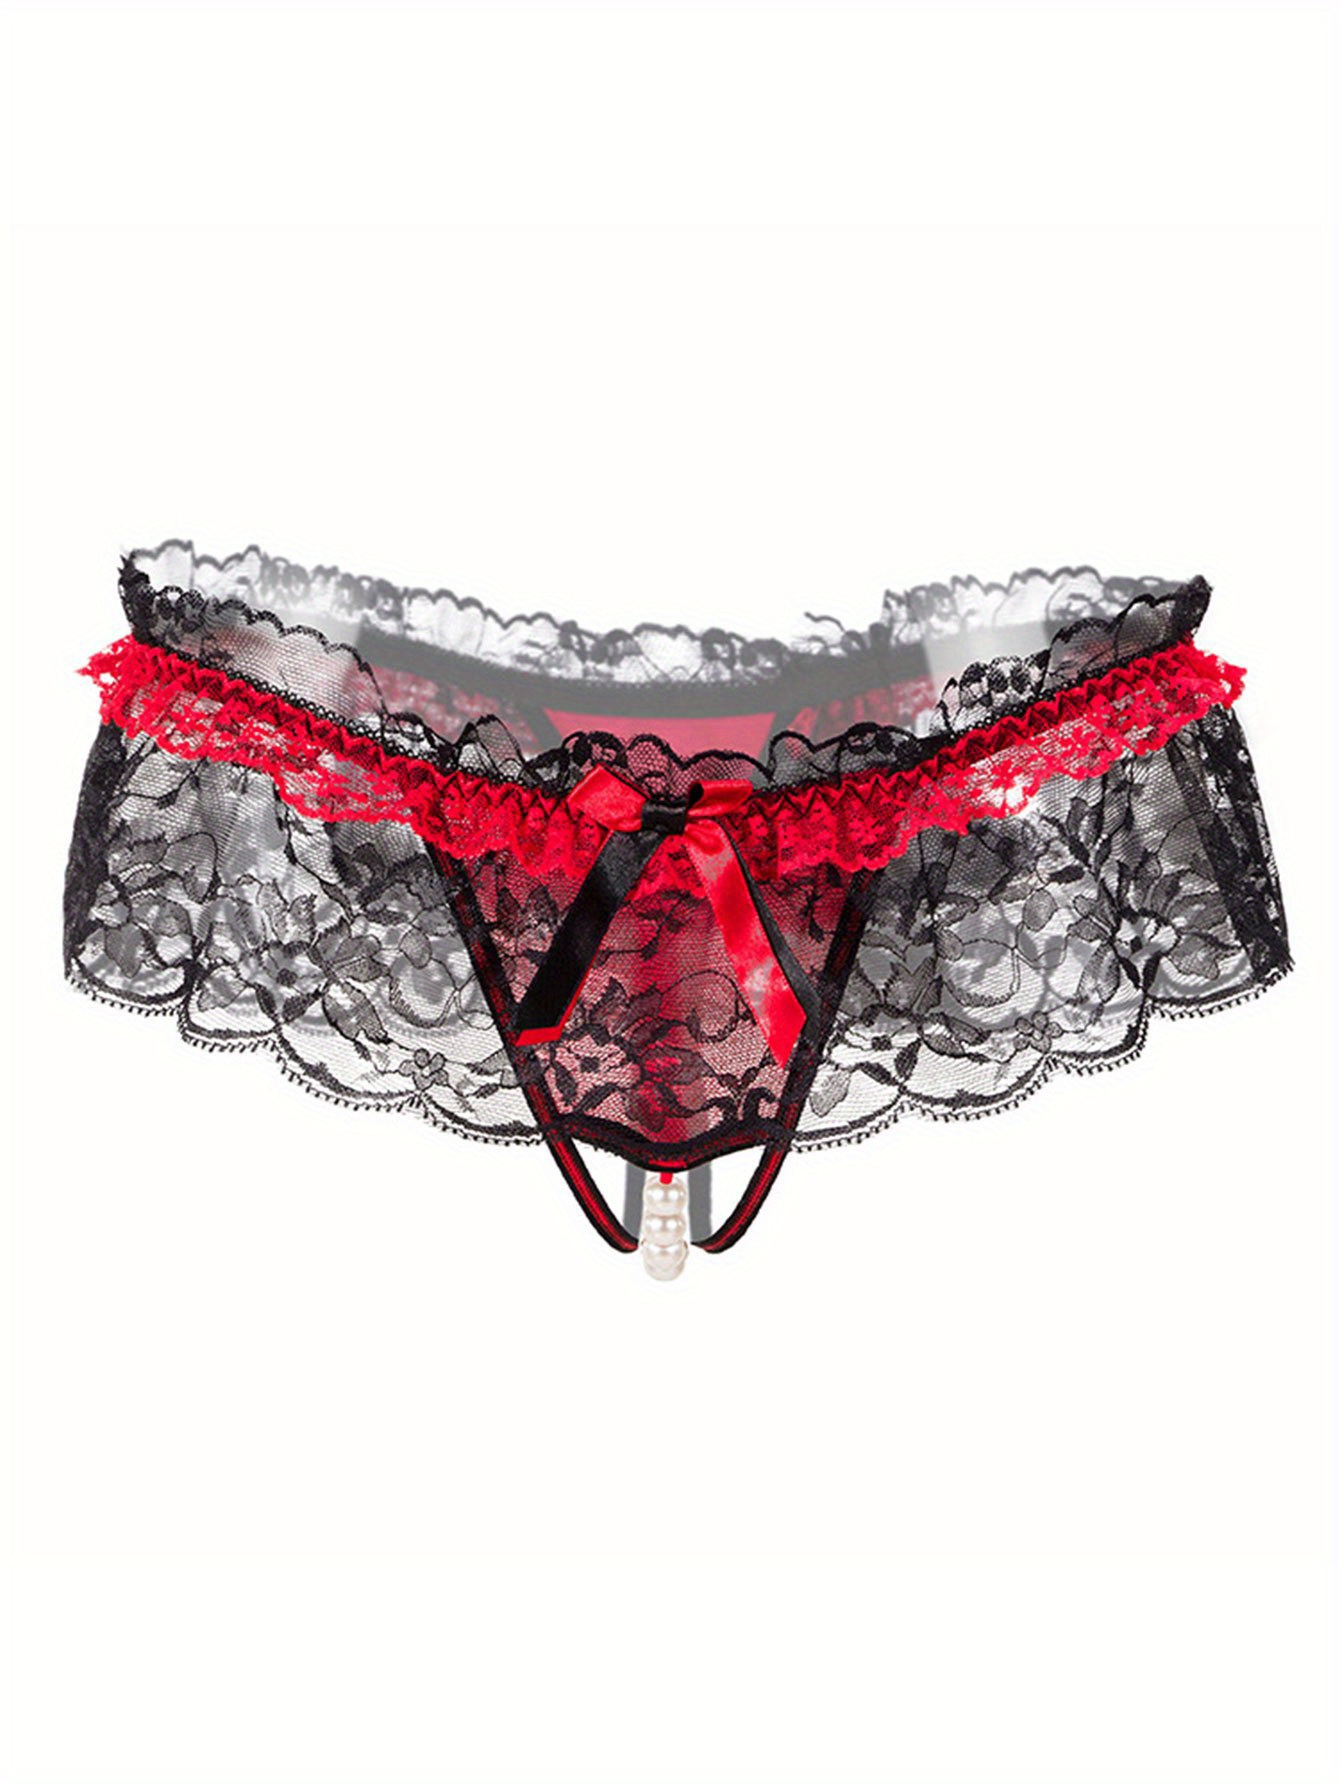 O&A Women's G-String Pearl Panties 3 Pack ((Red, Pink, Black